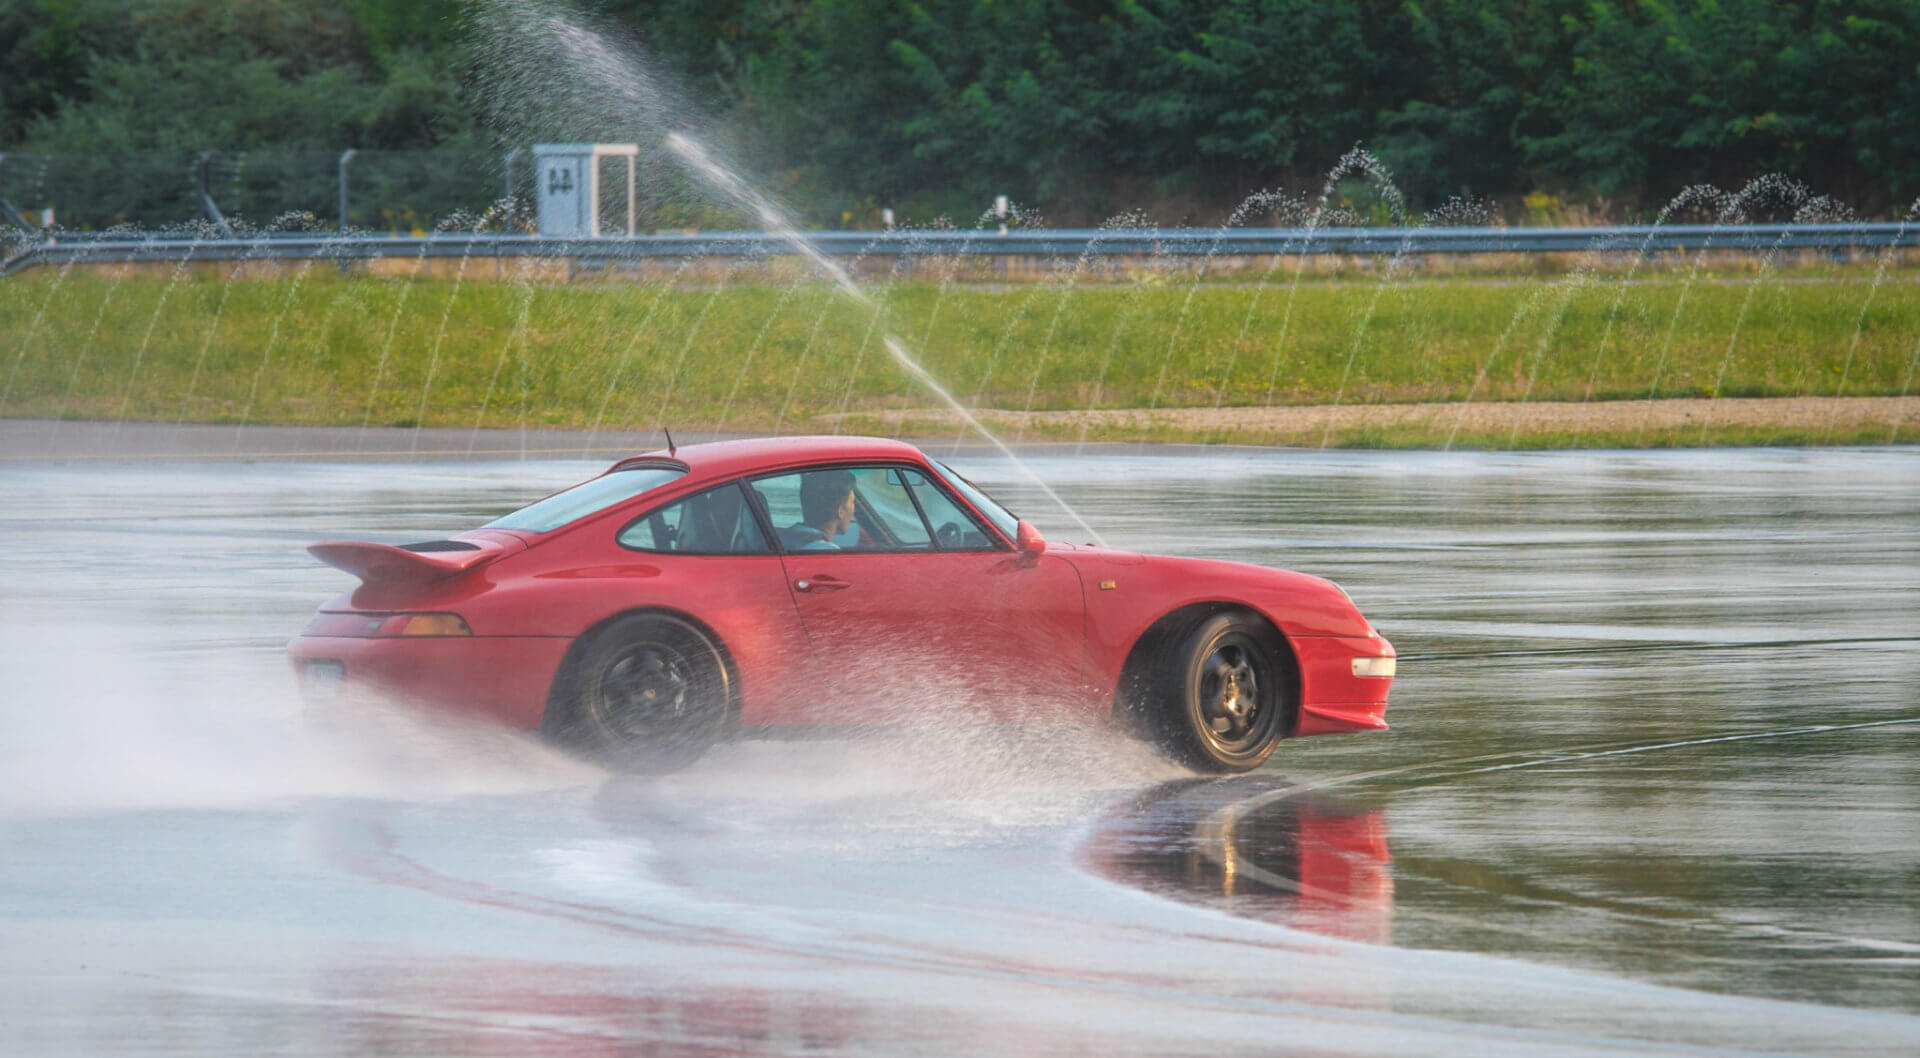 Driftender Porsche auf nasser Fahrbahn